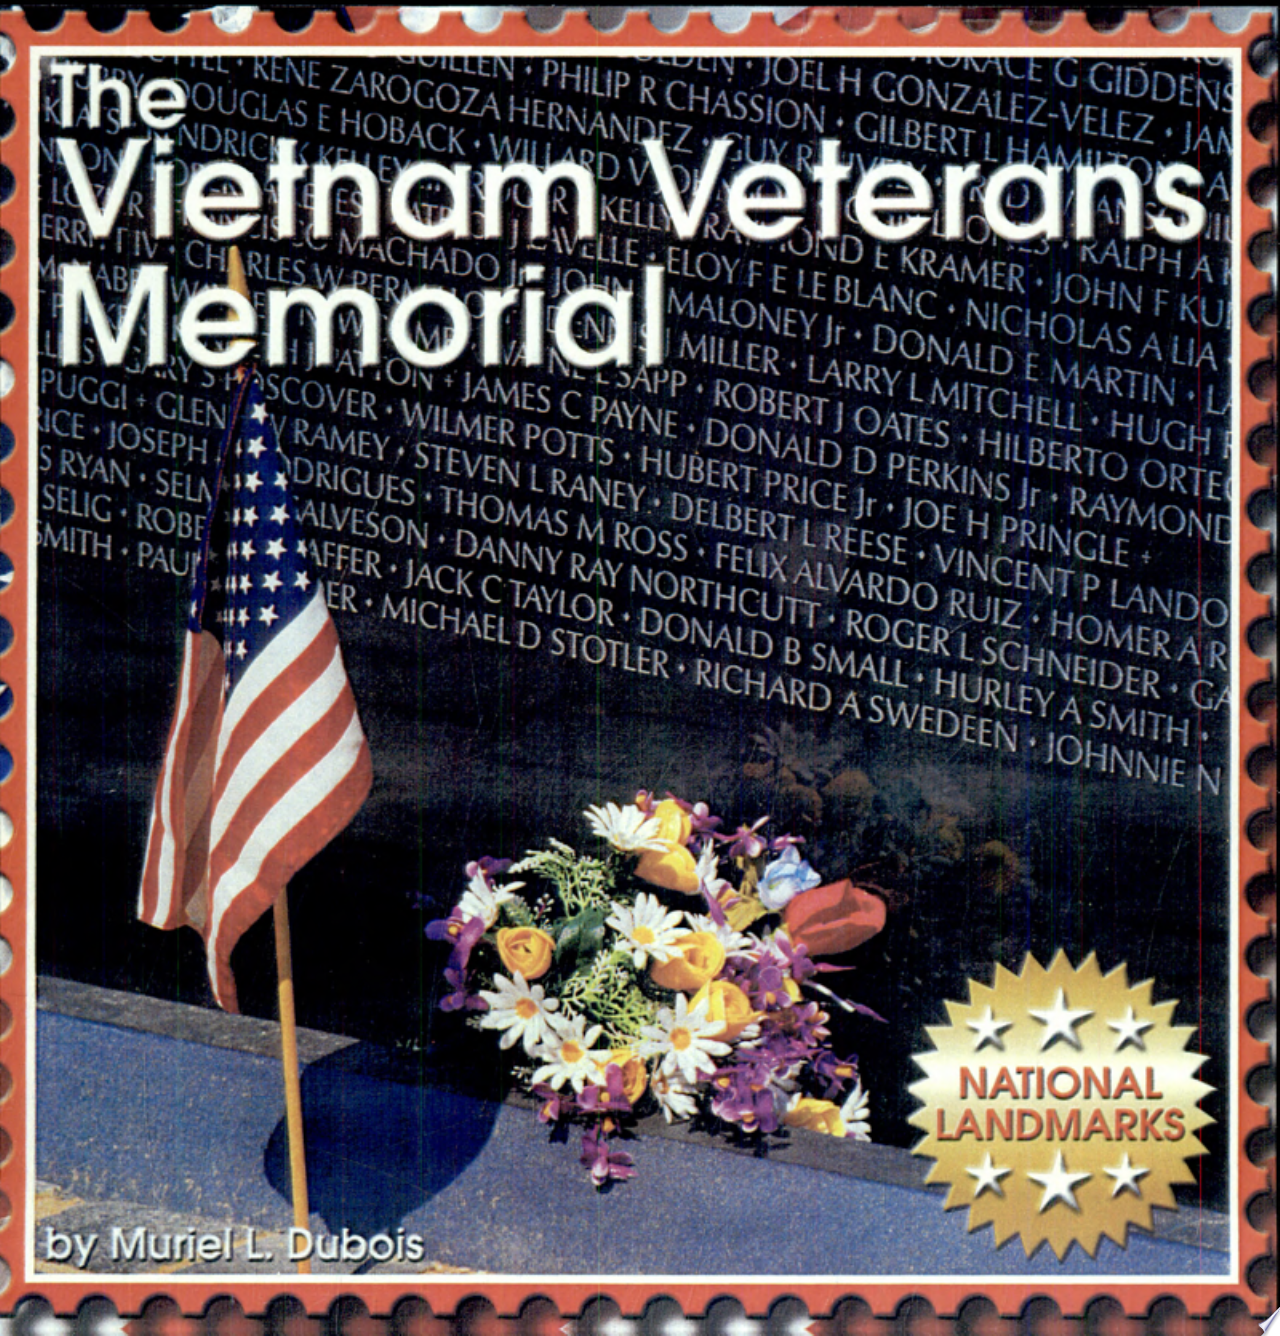 Image for "The Vietnam Veterans Memorial"